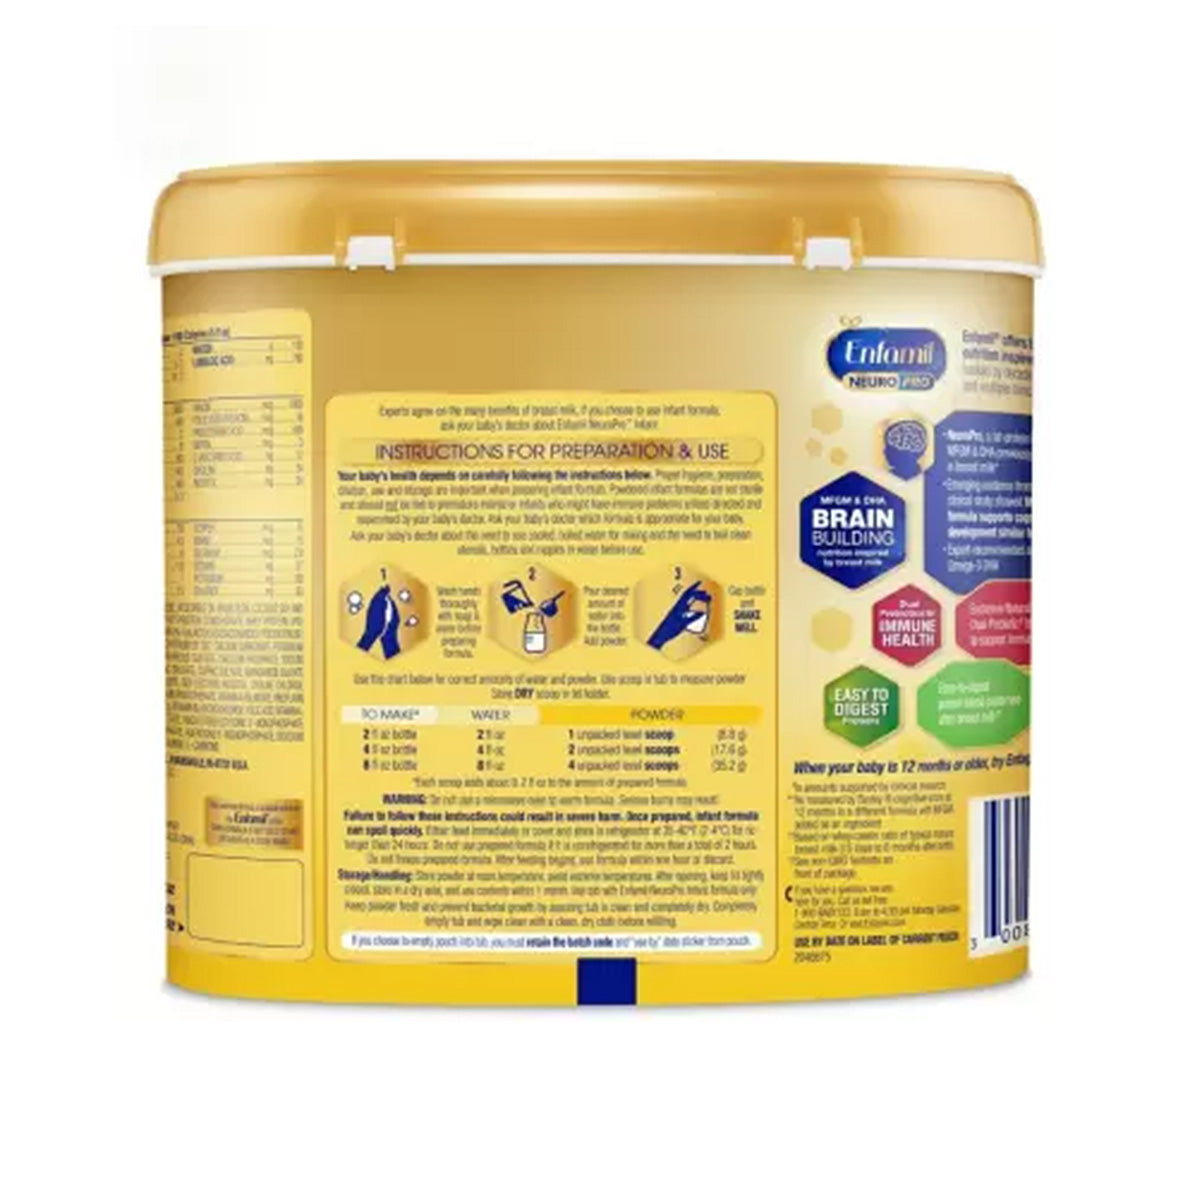 Enfamil Neuro Pro Care Infant Formula Milk based Powder (0-12m) - 587g